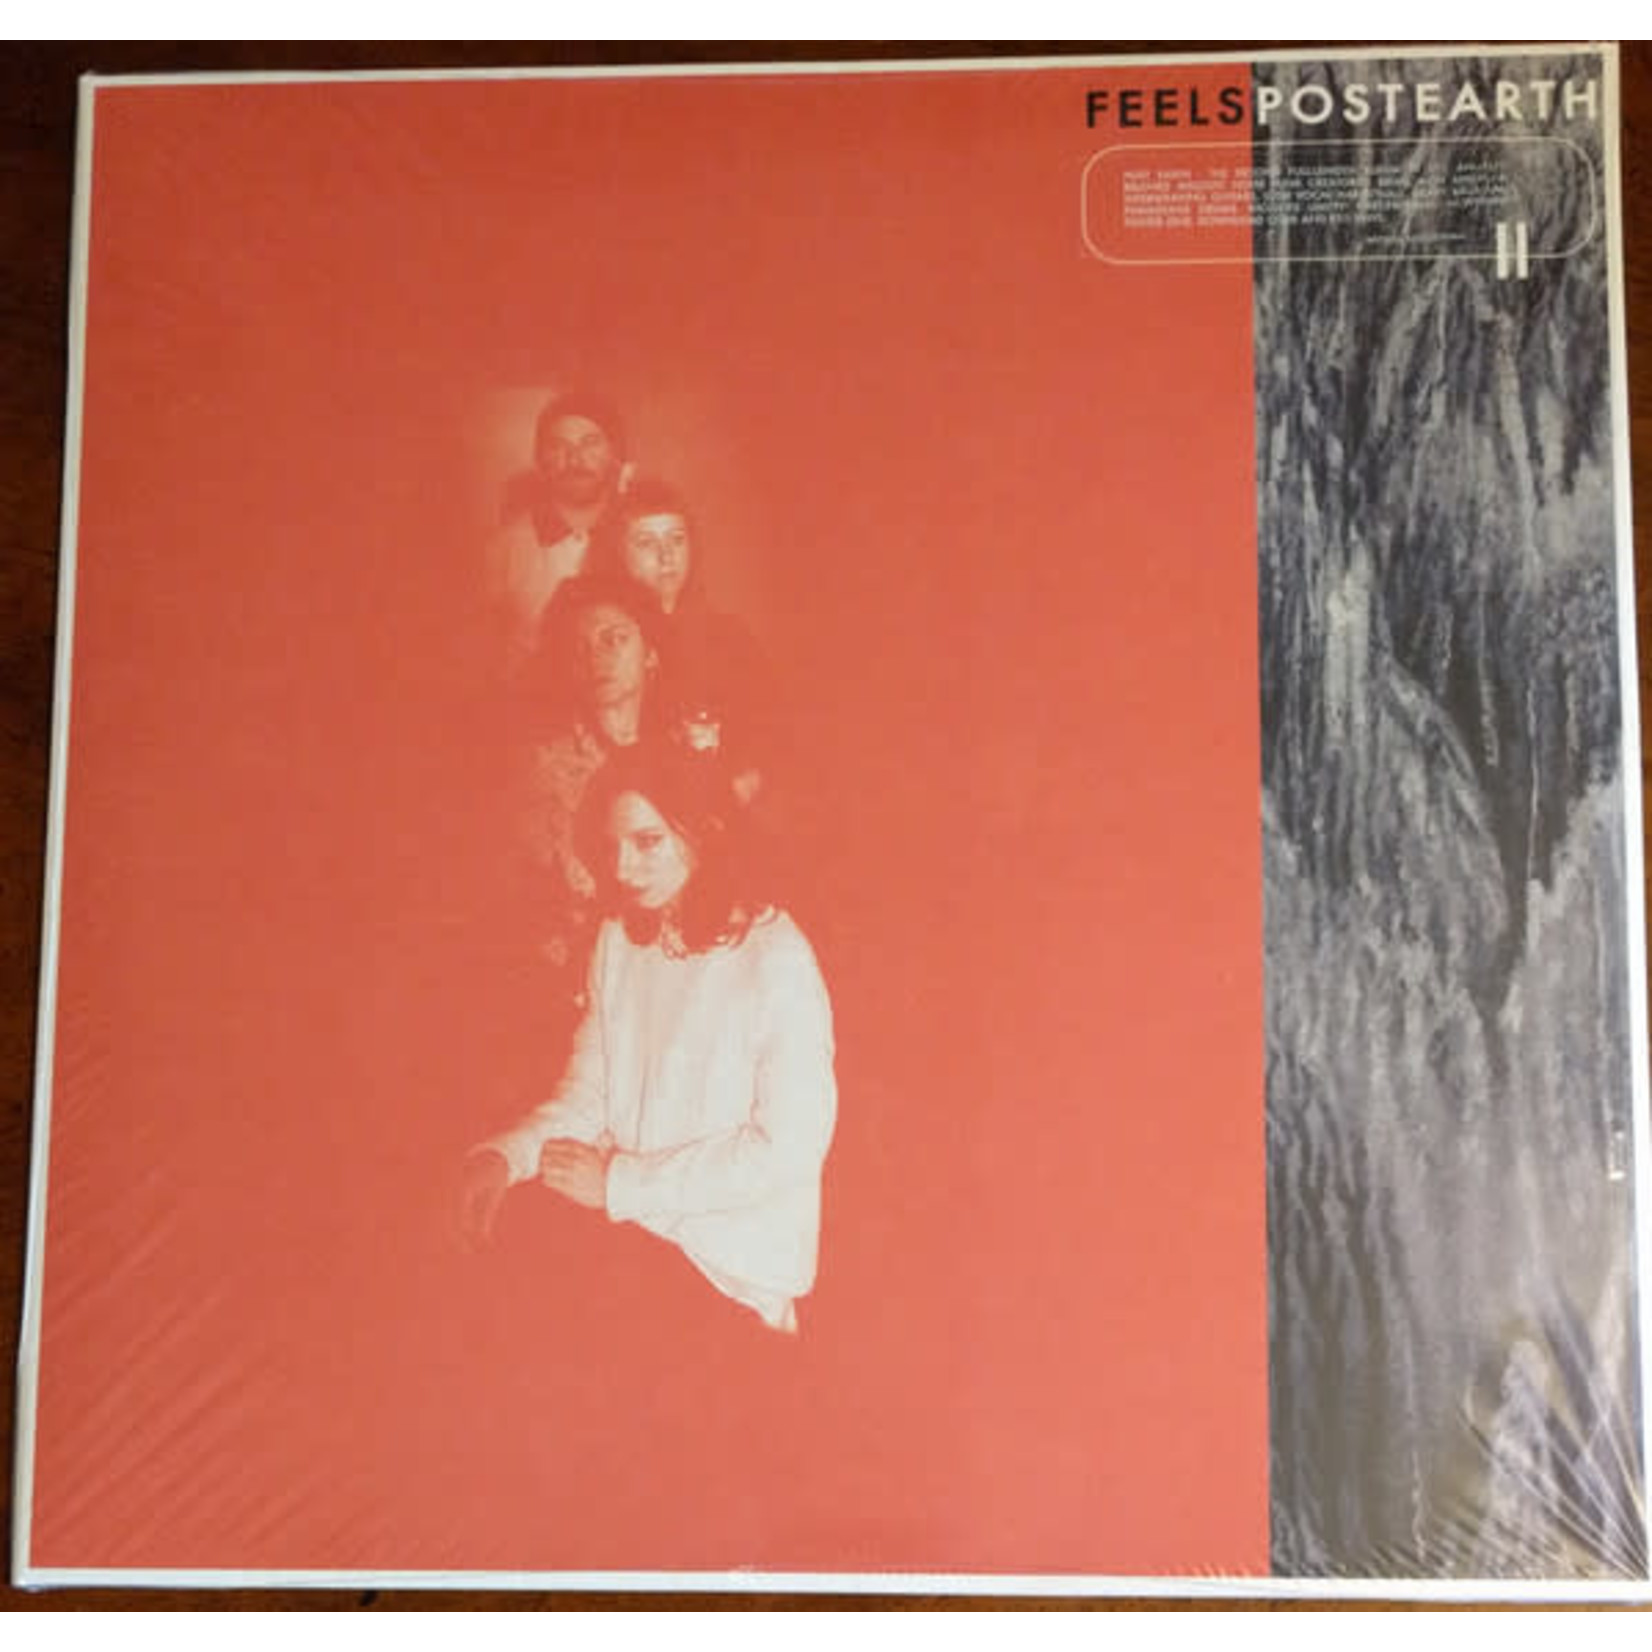 Wichita FEELS - Post Earth (LP) [Red]